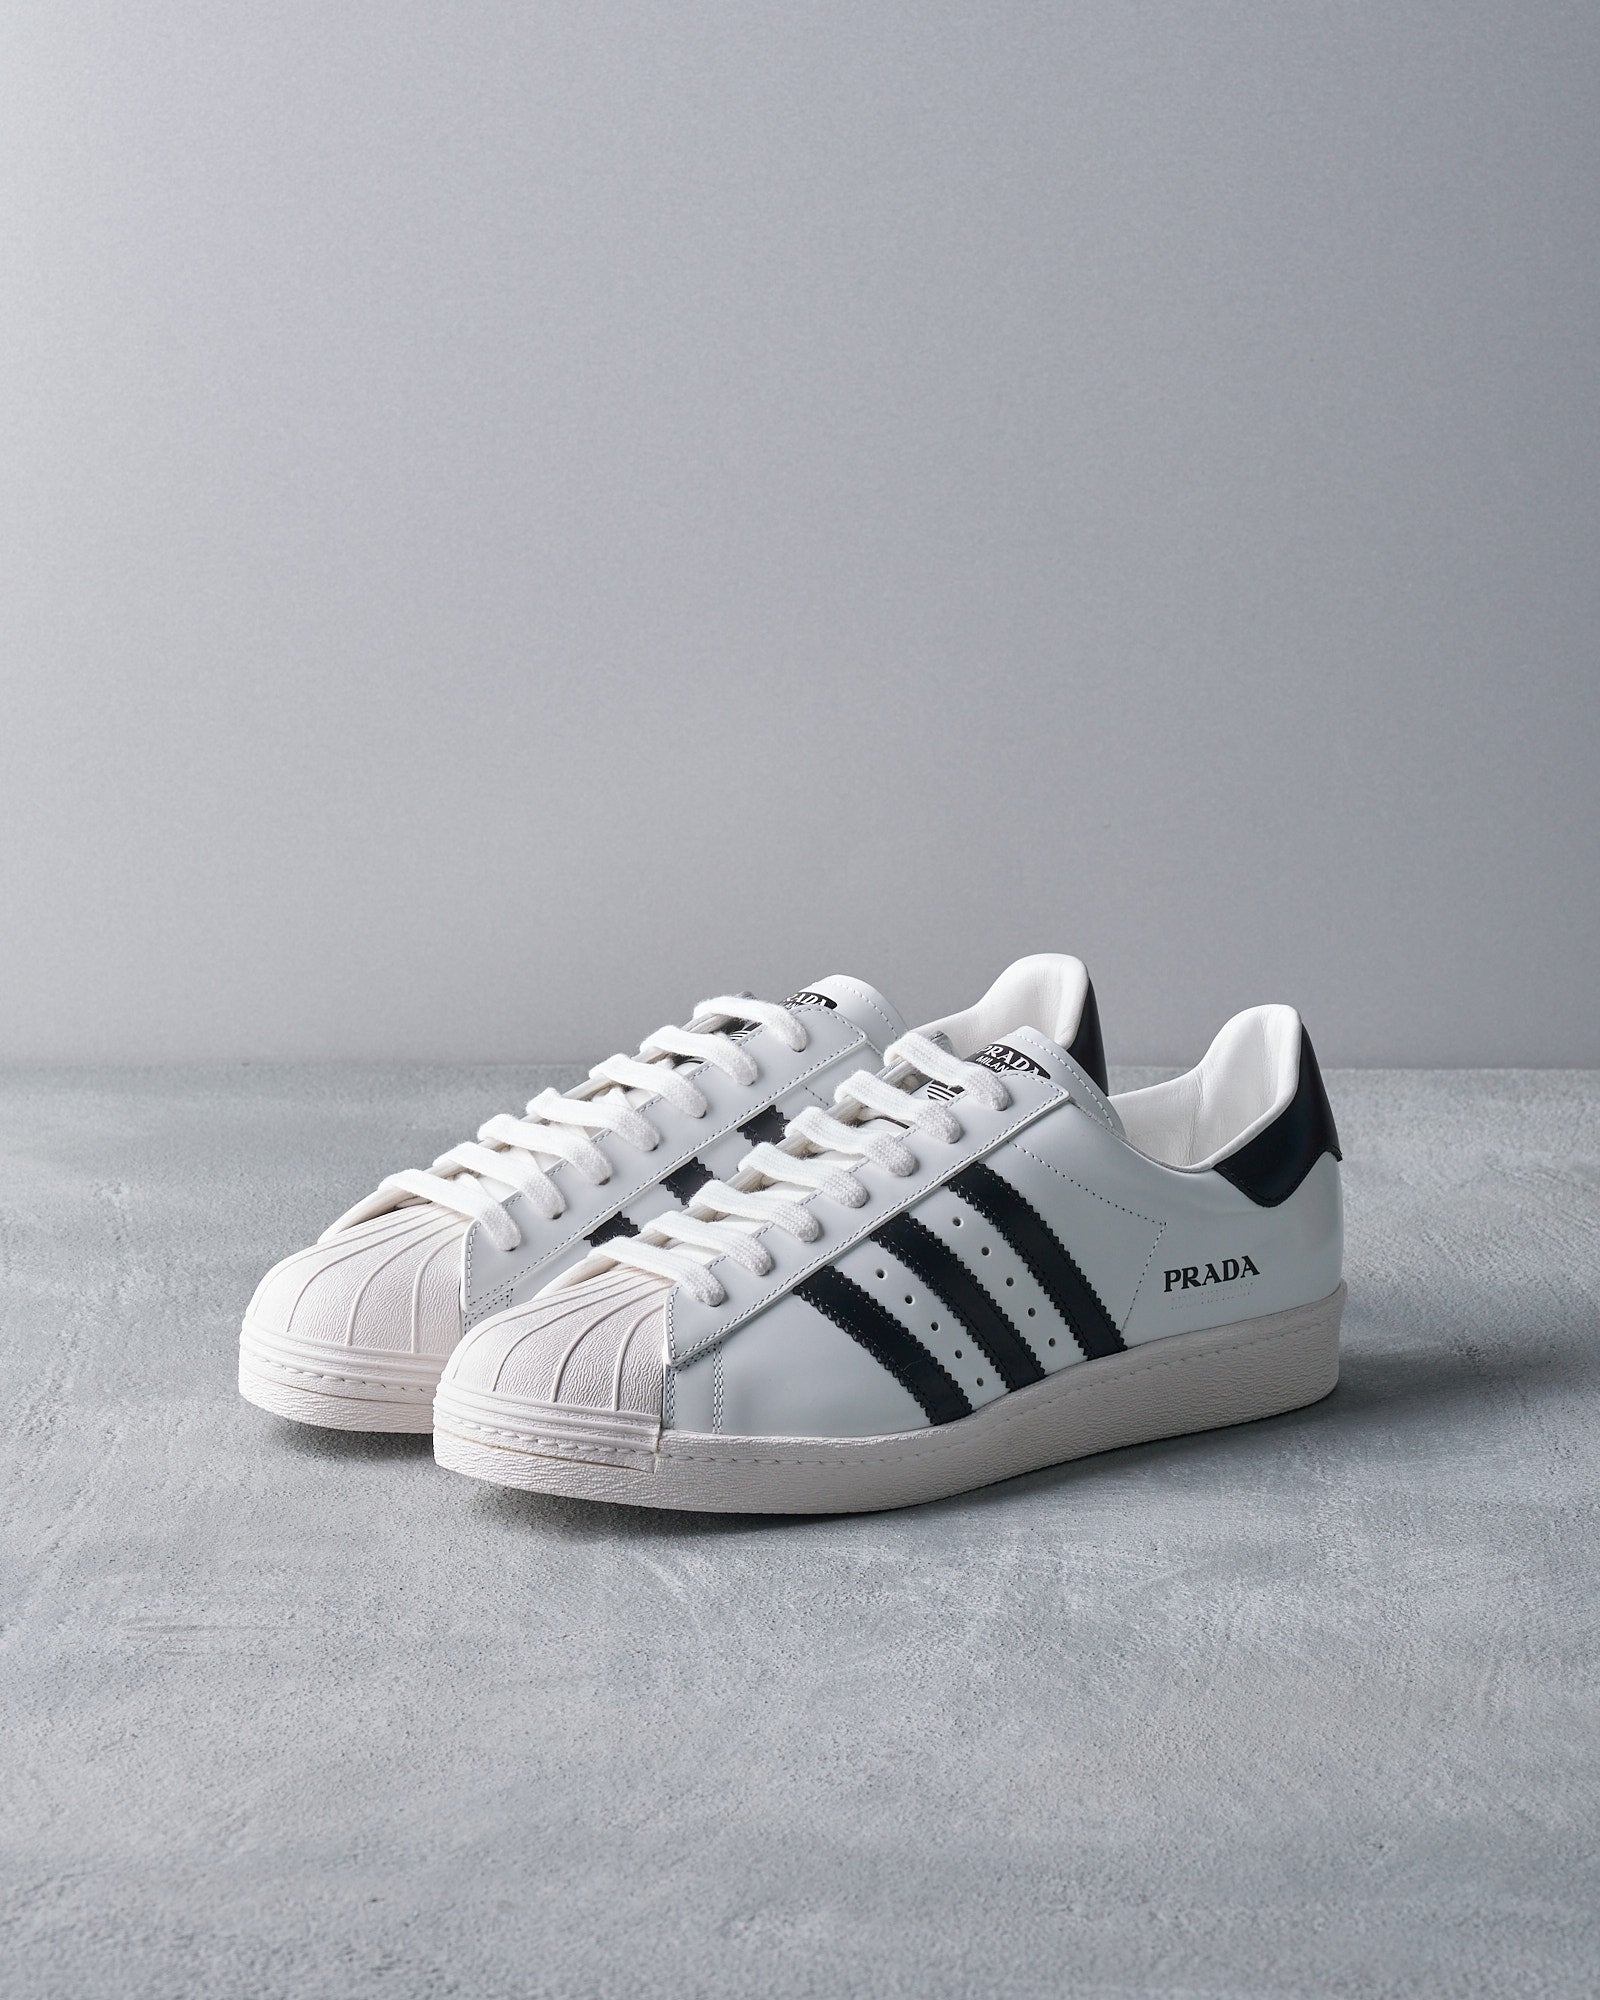 Prada x Adidas Superstar sneaker - KOT-J